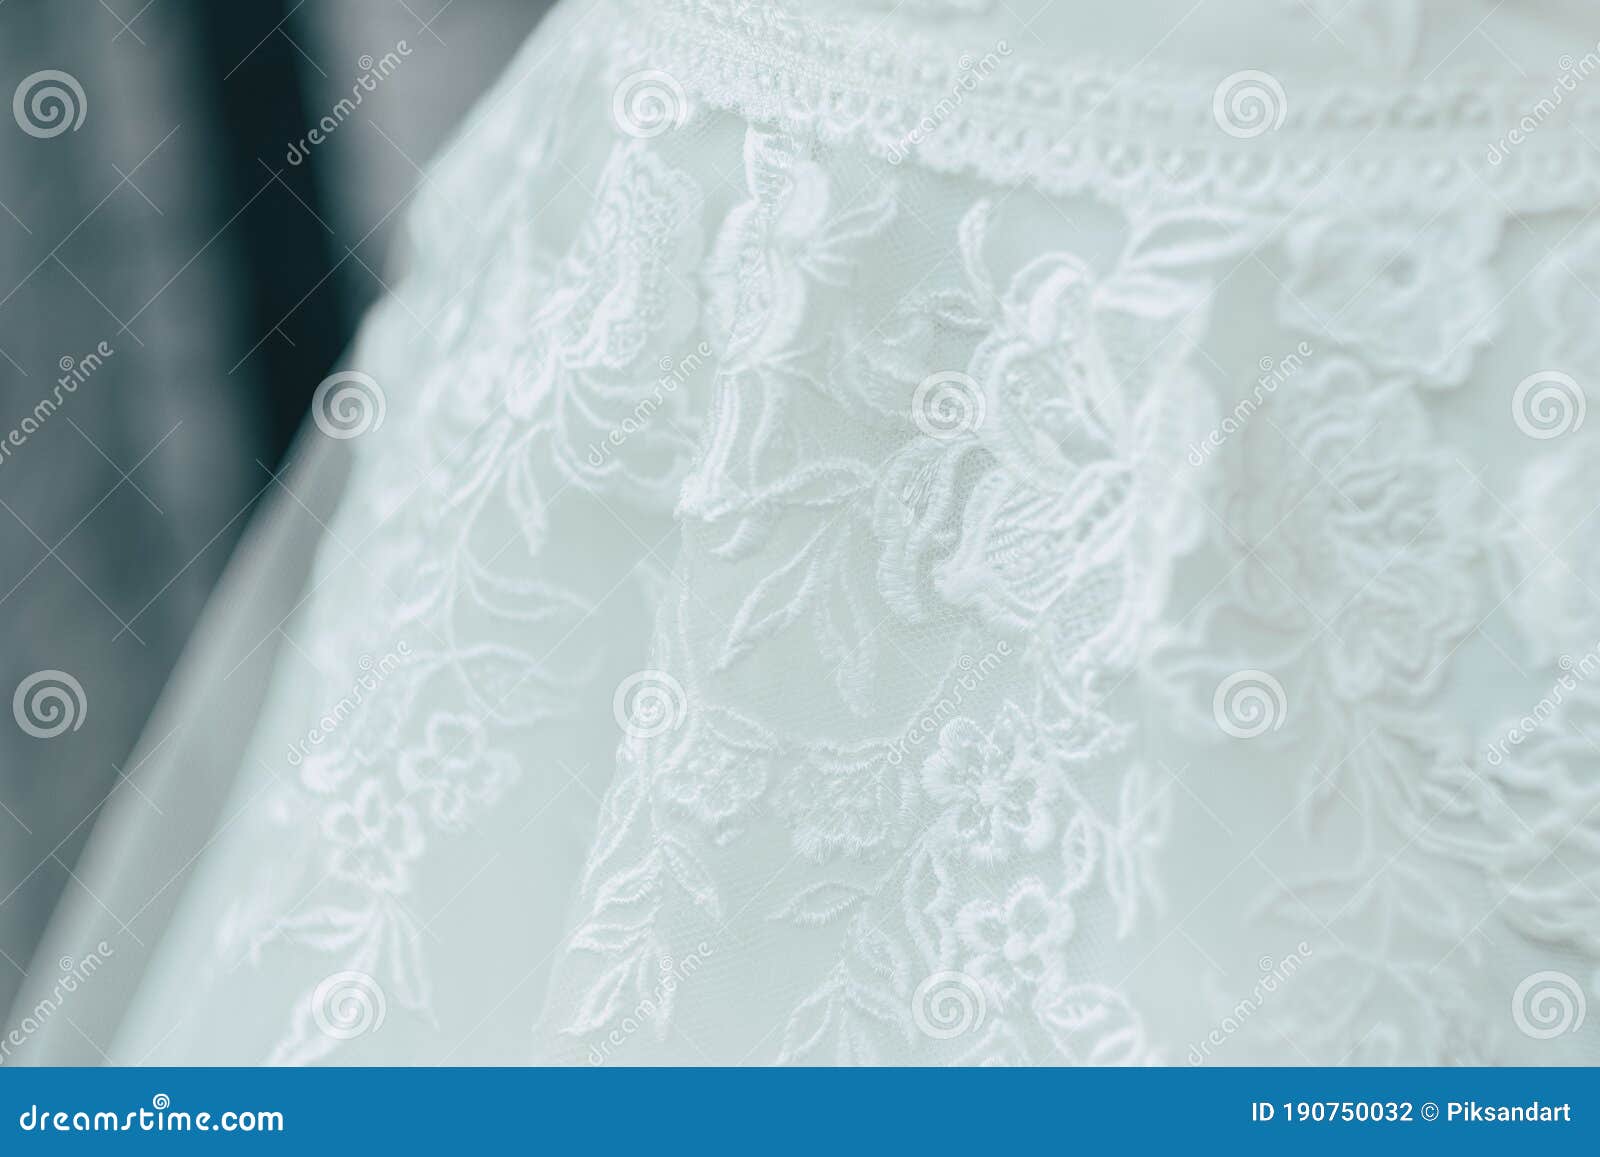 Fine Lace on a Wedding Dress Stock Photo - Image of romantic, dress ...